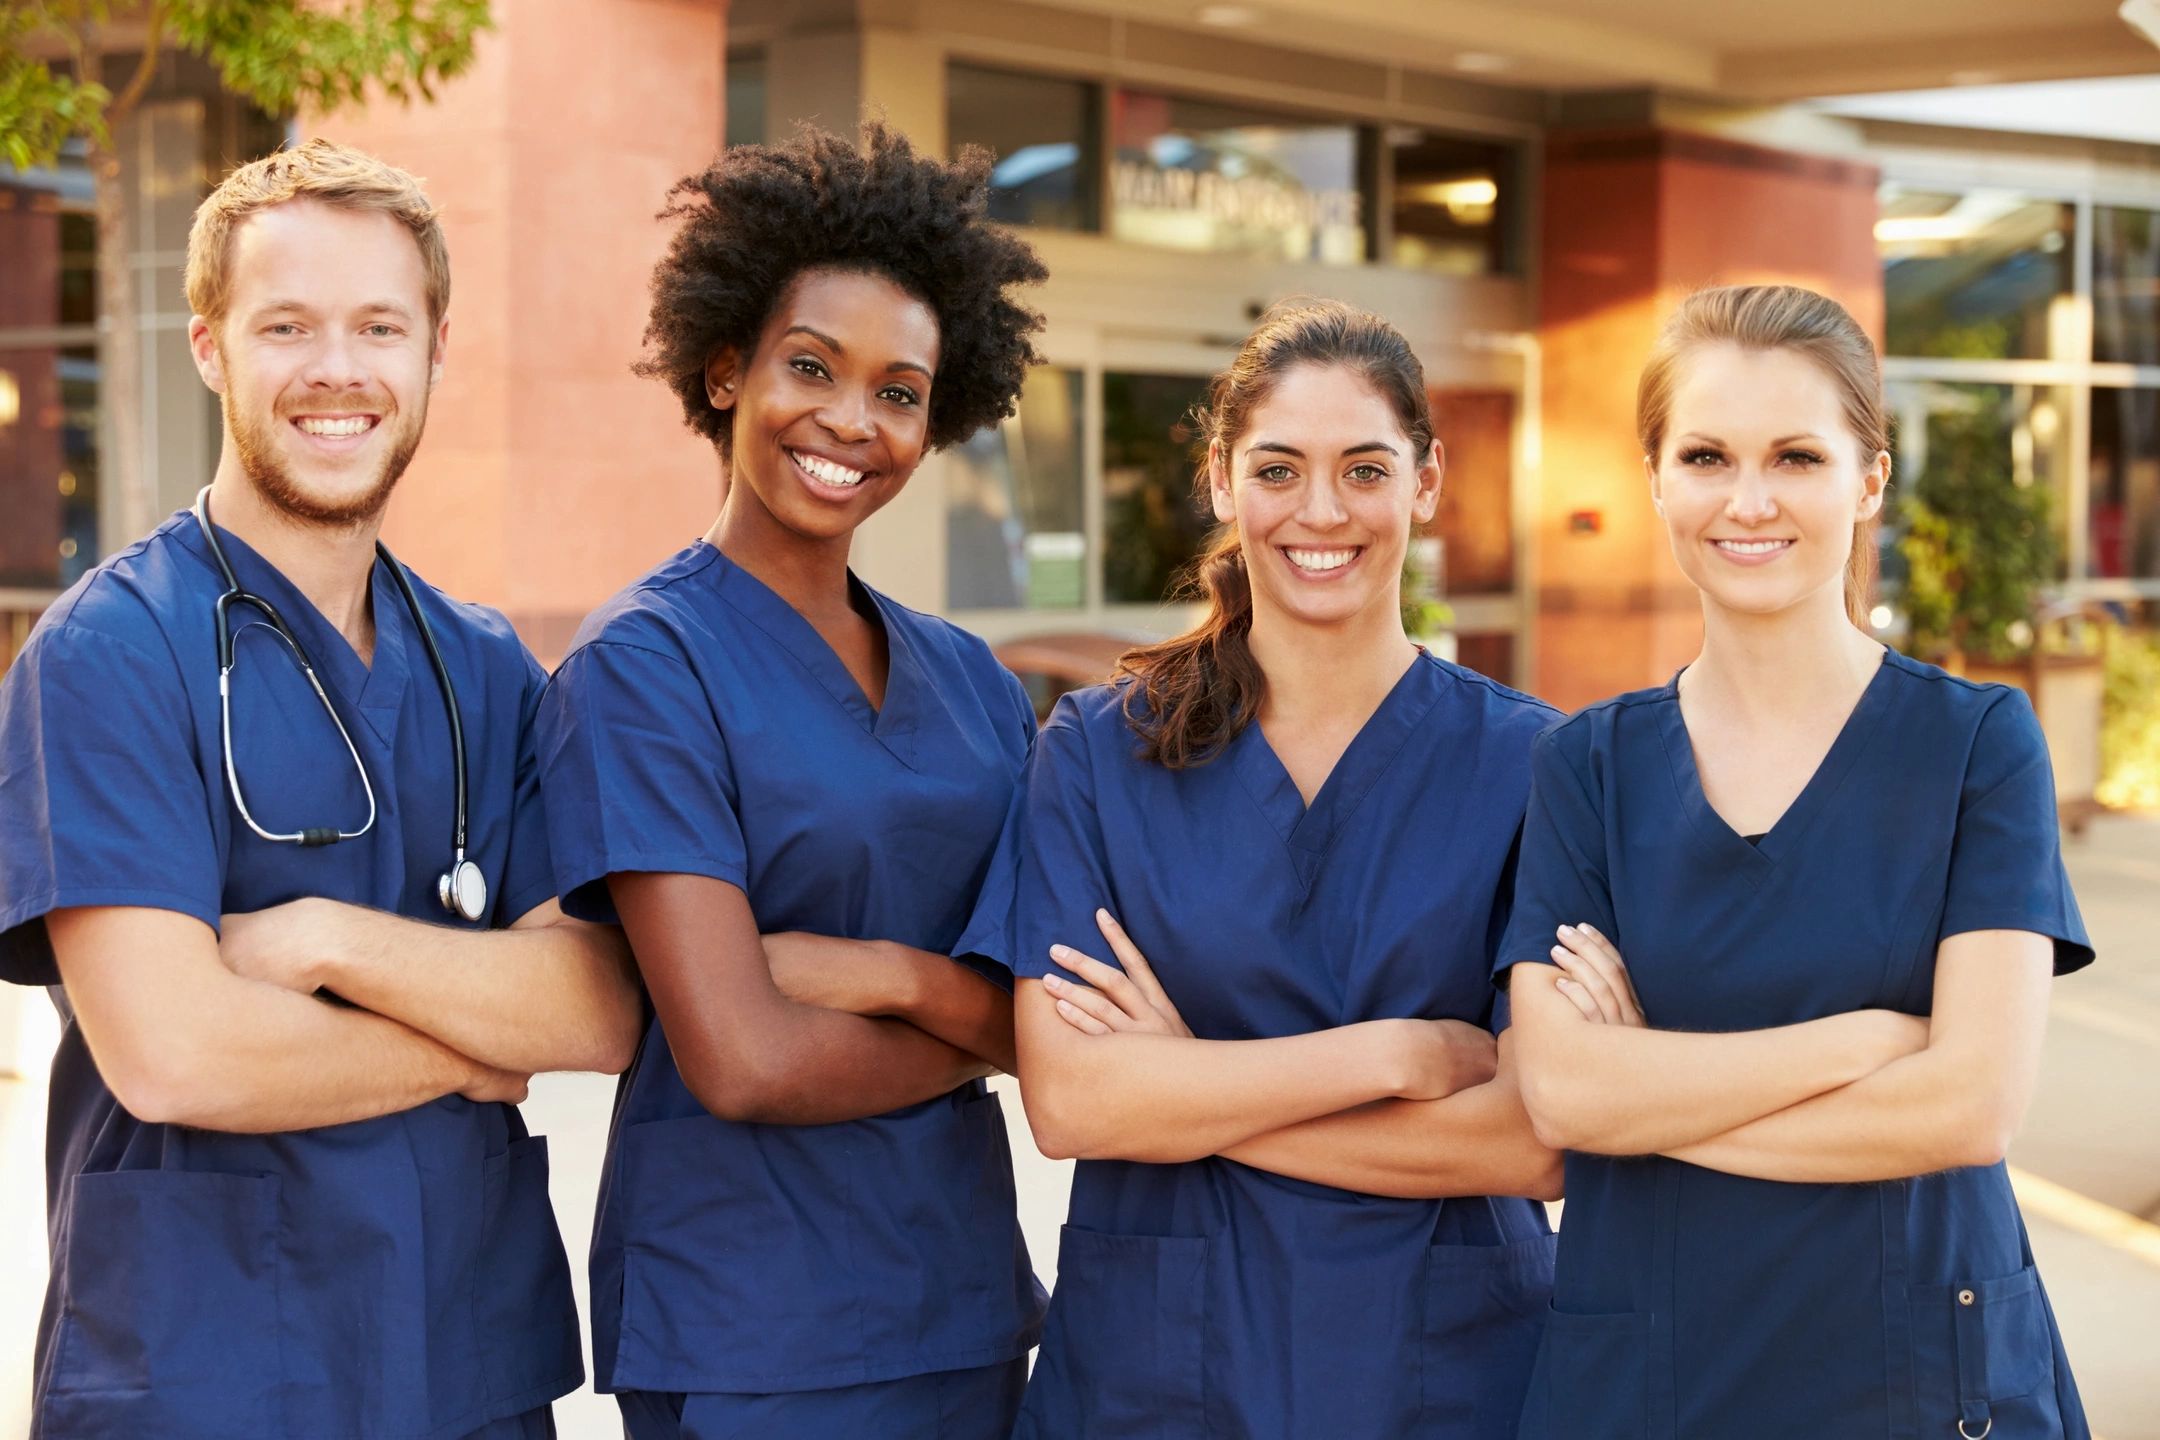 Nursing School | San Diego, CA. - CNA Program - IHG Career College